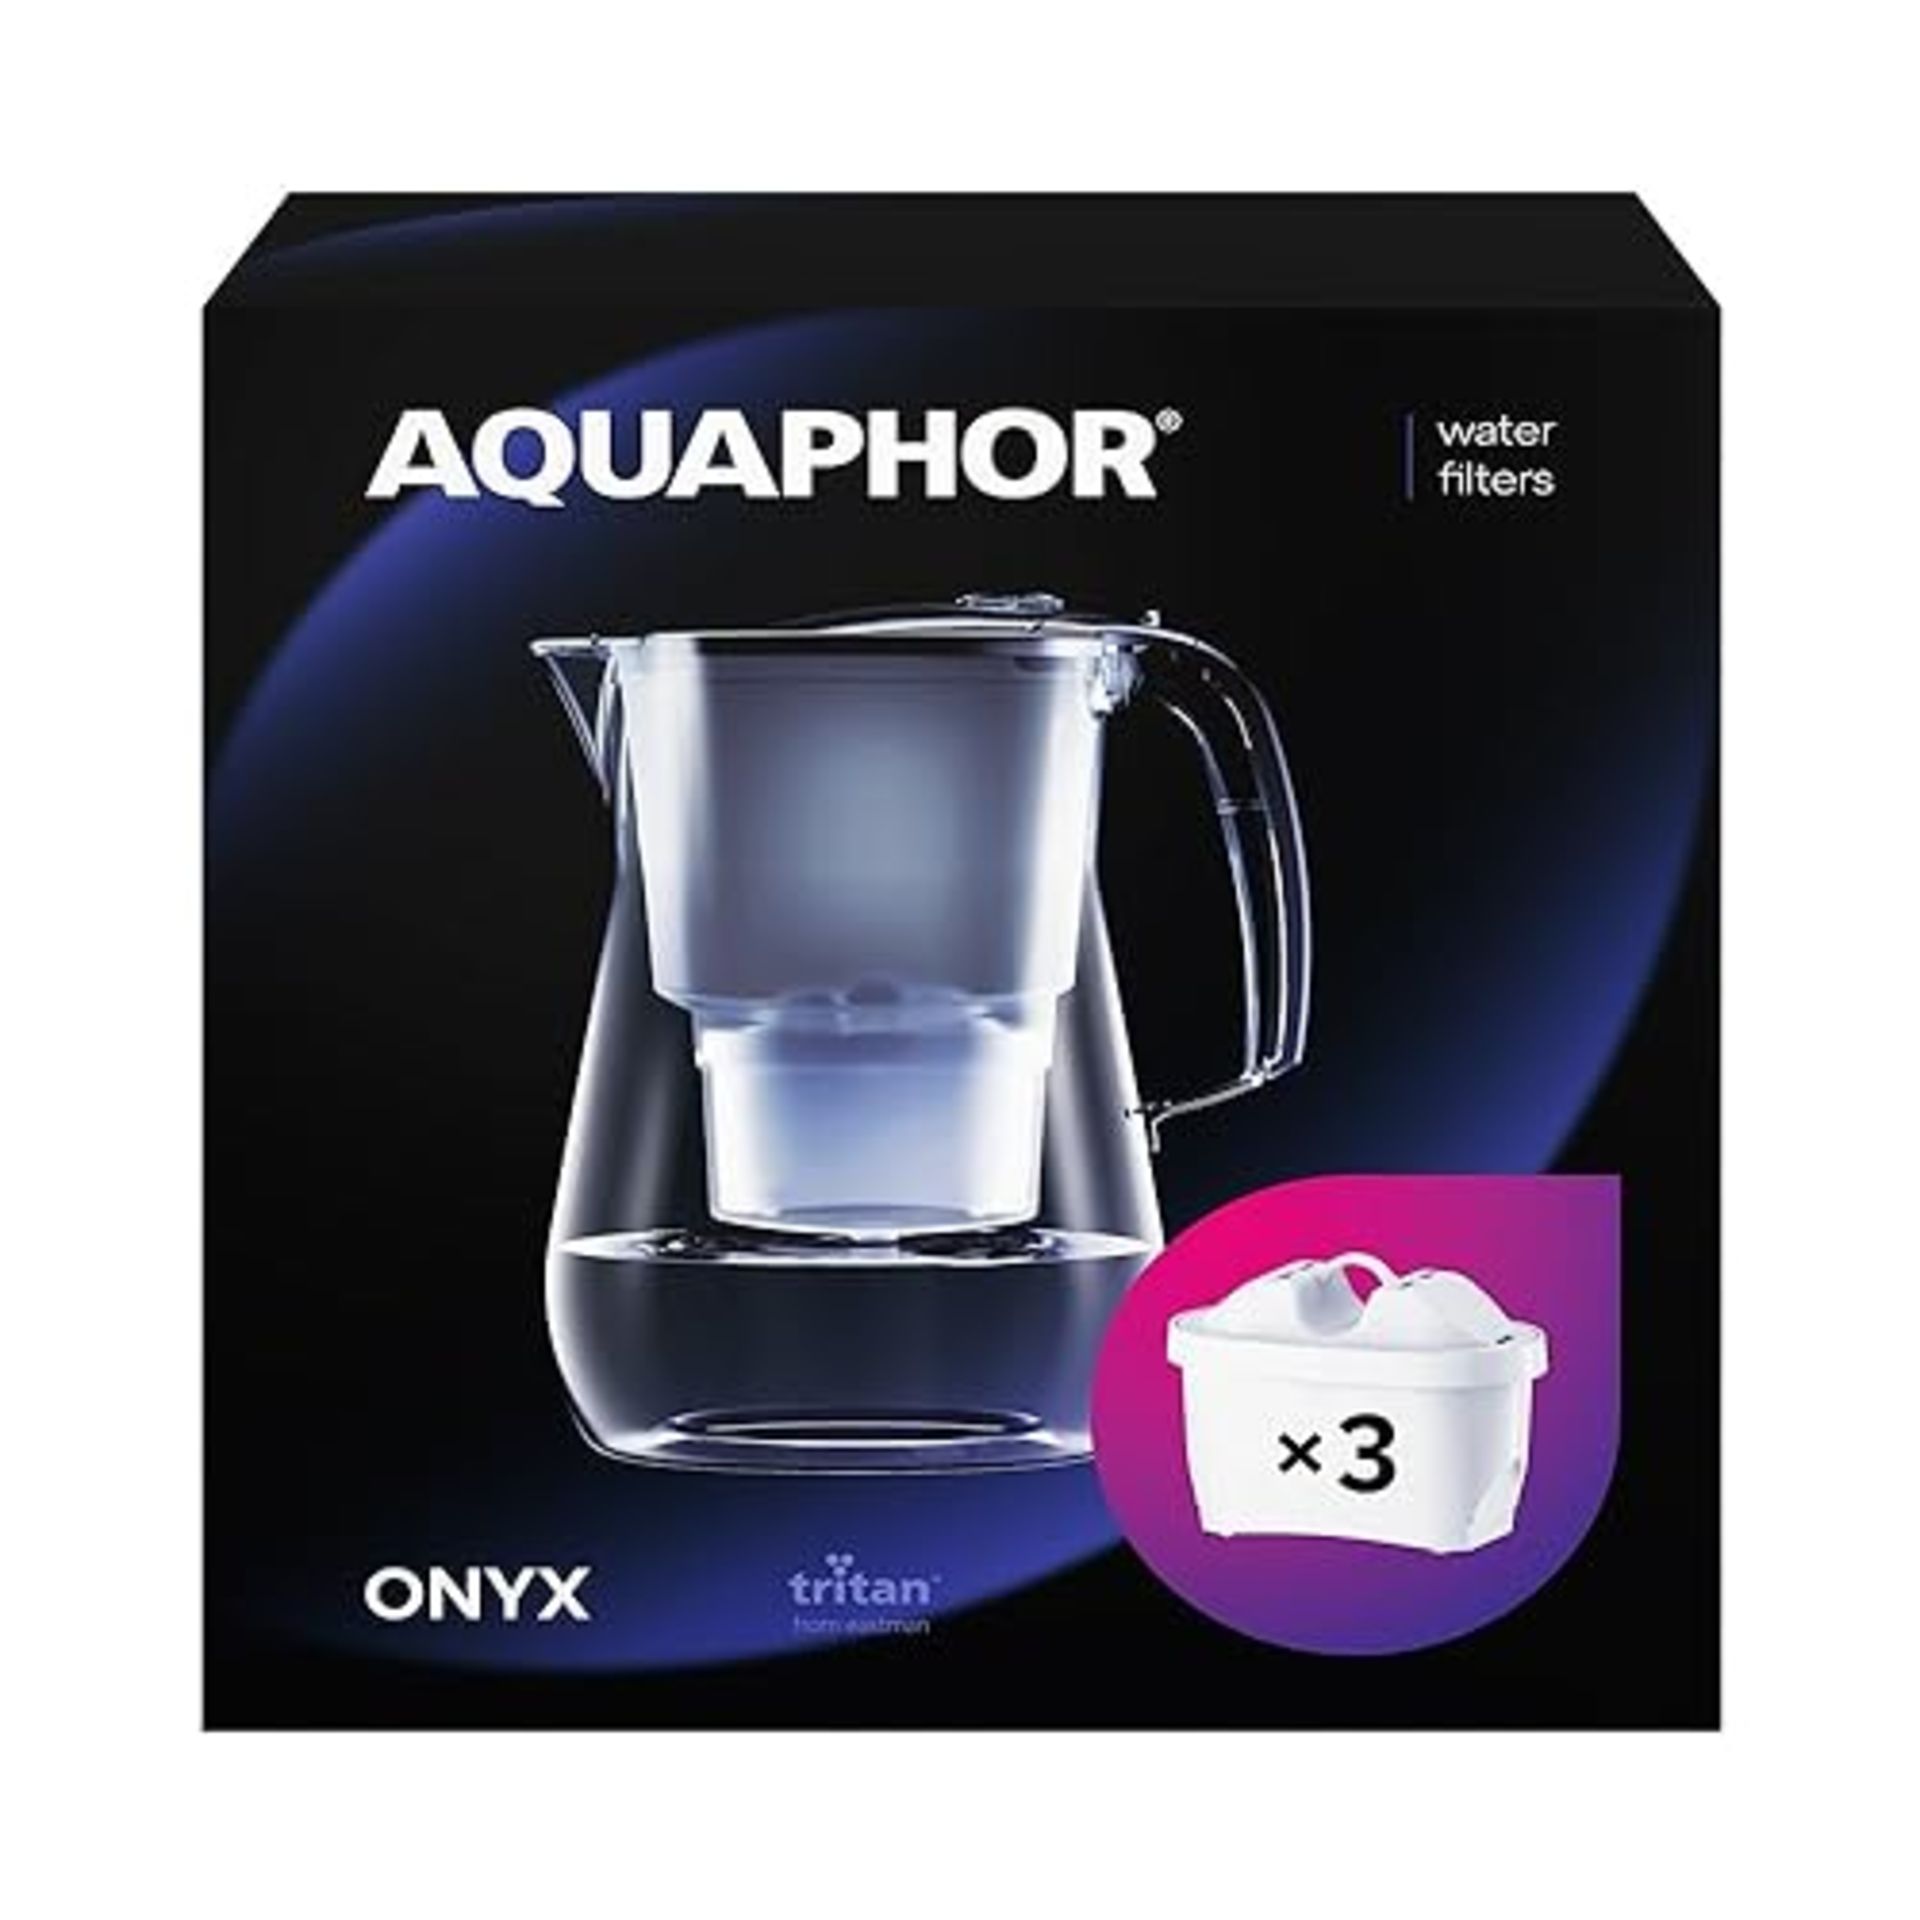 Aquaphor Onyx Black Water Filter Jug - Counter Top Design With 4.2L Capacity, 3 X Maxfor+ Filters...